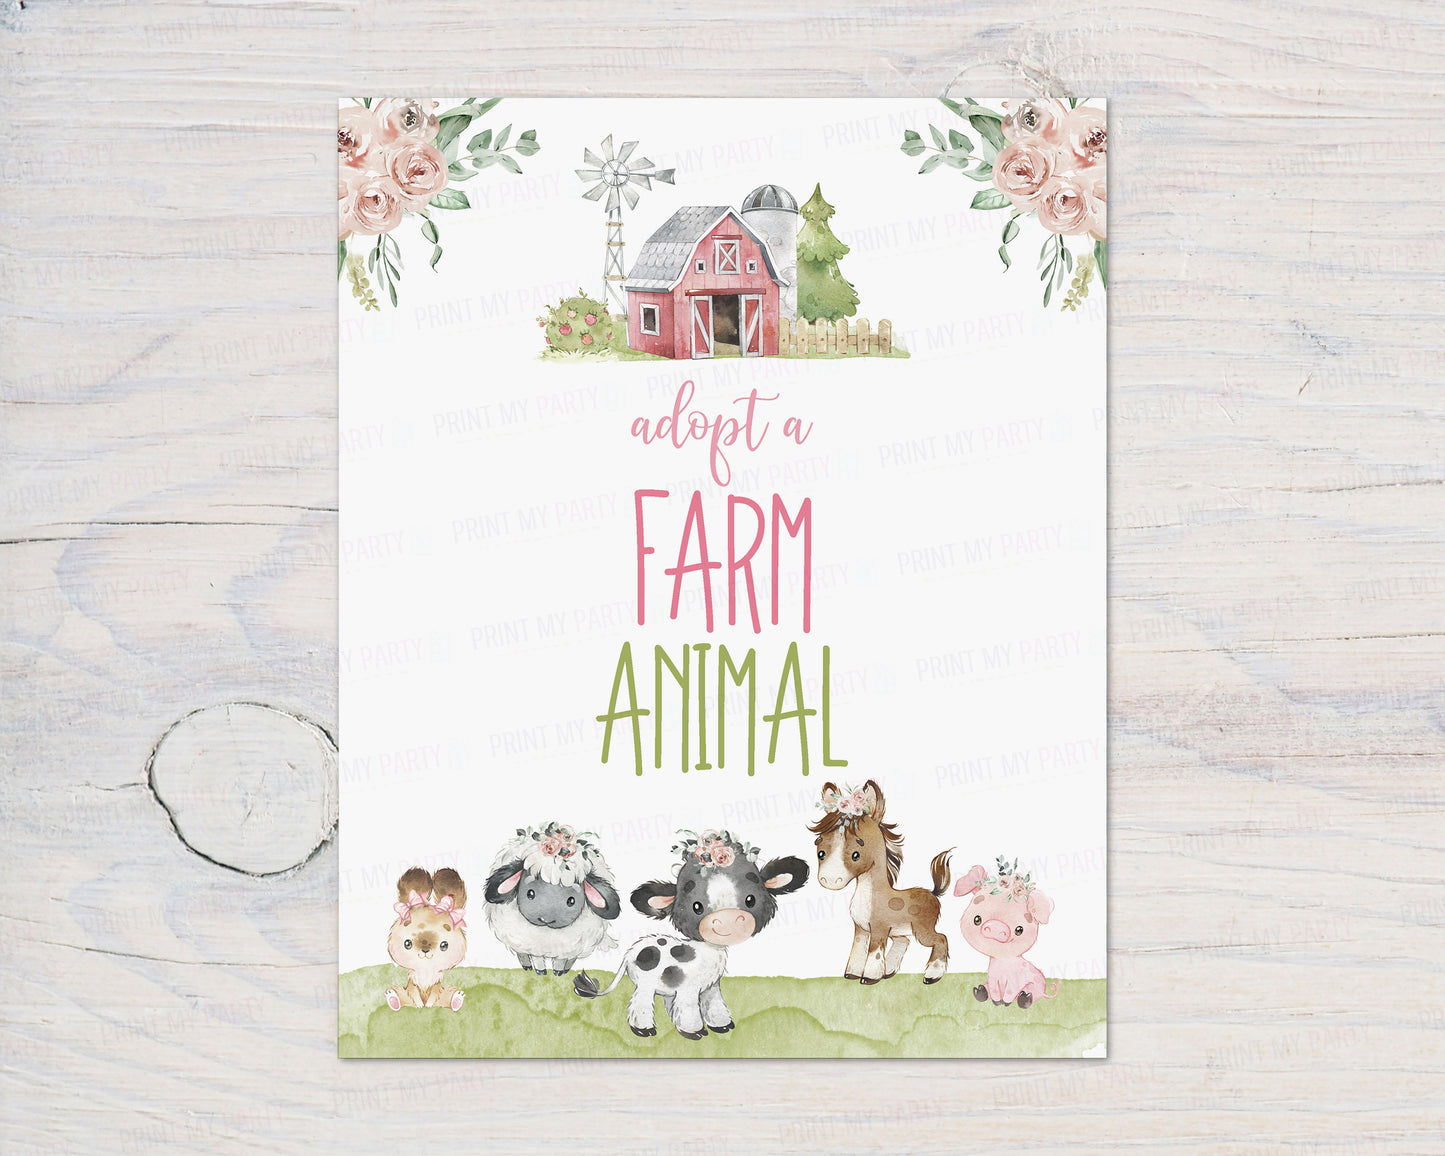 Adopt a farm animals Sign Printable | Floral Farm Party Table Decoration - 11C1